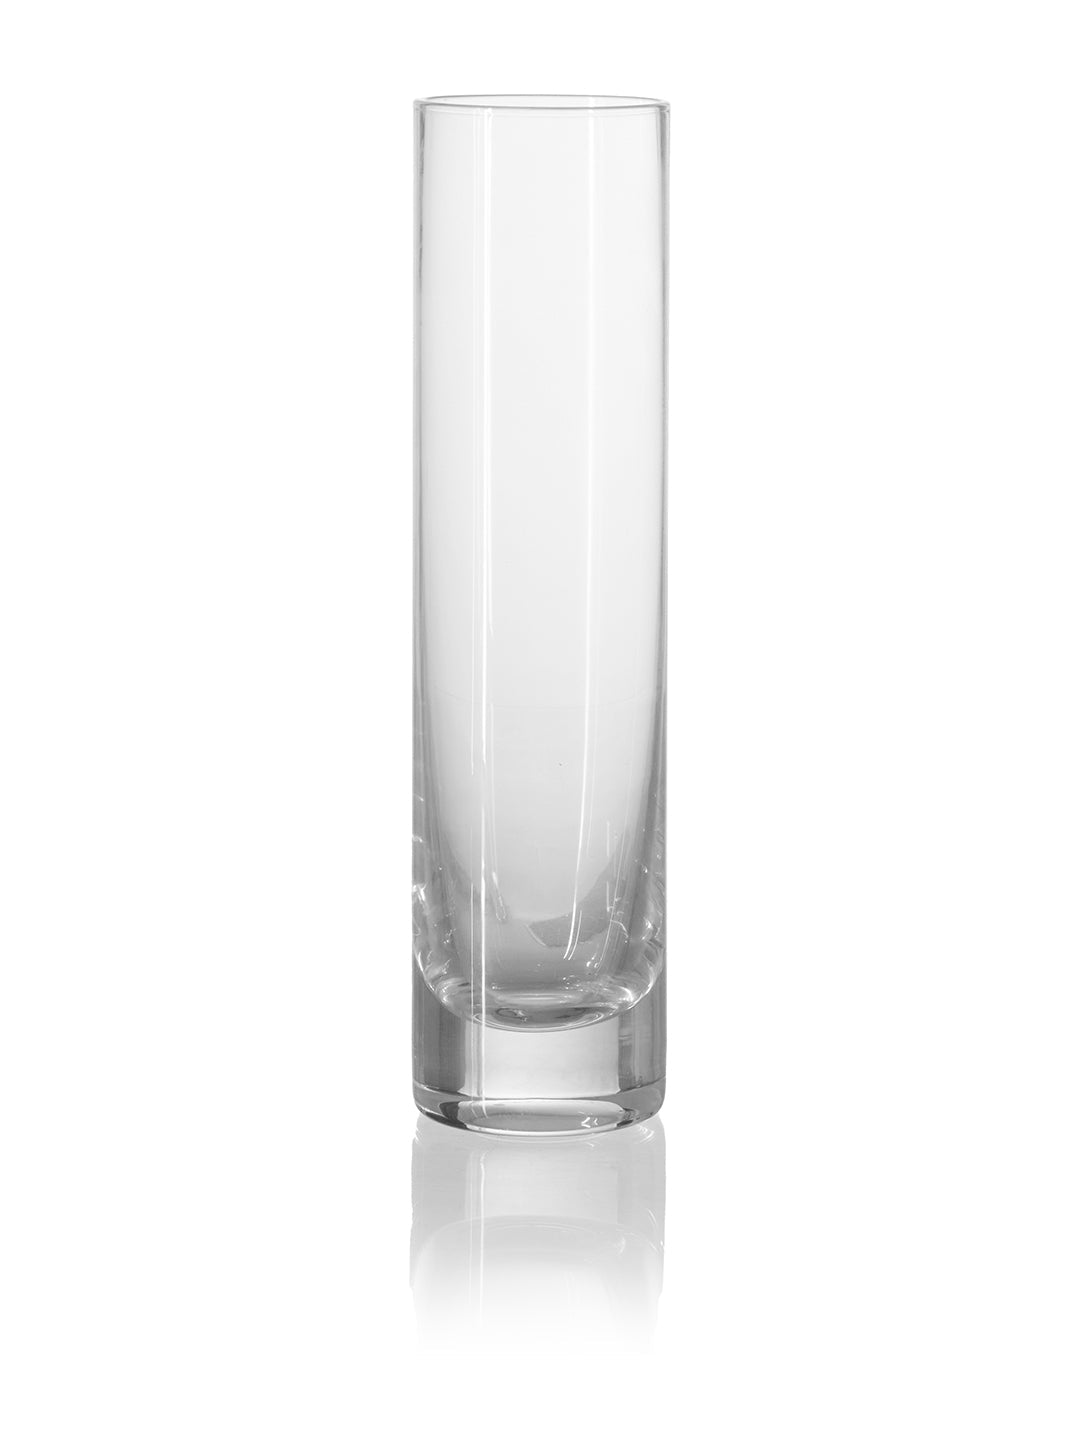 Modern Slim Highball Glass Set for Everyday Elegance, Set of 6